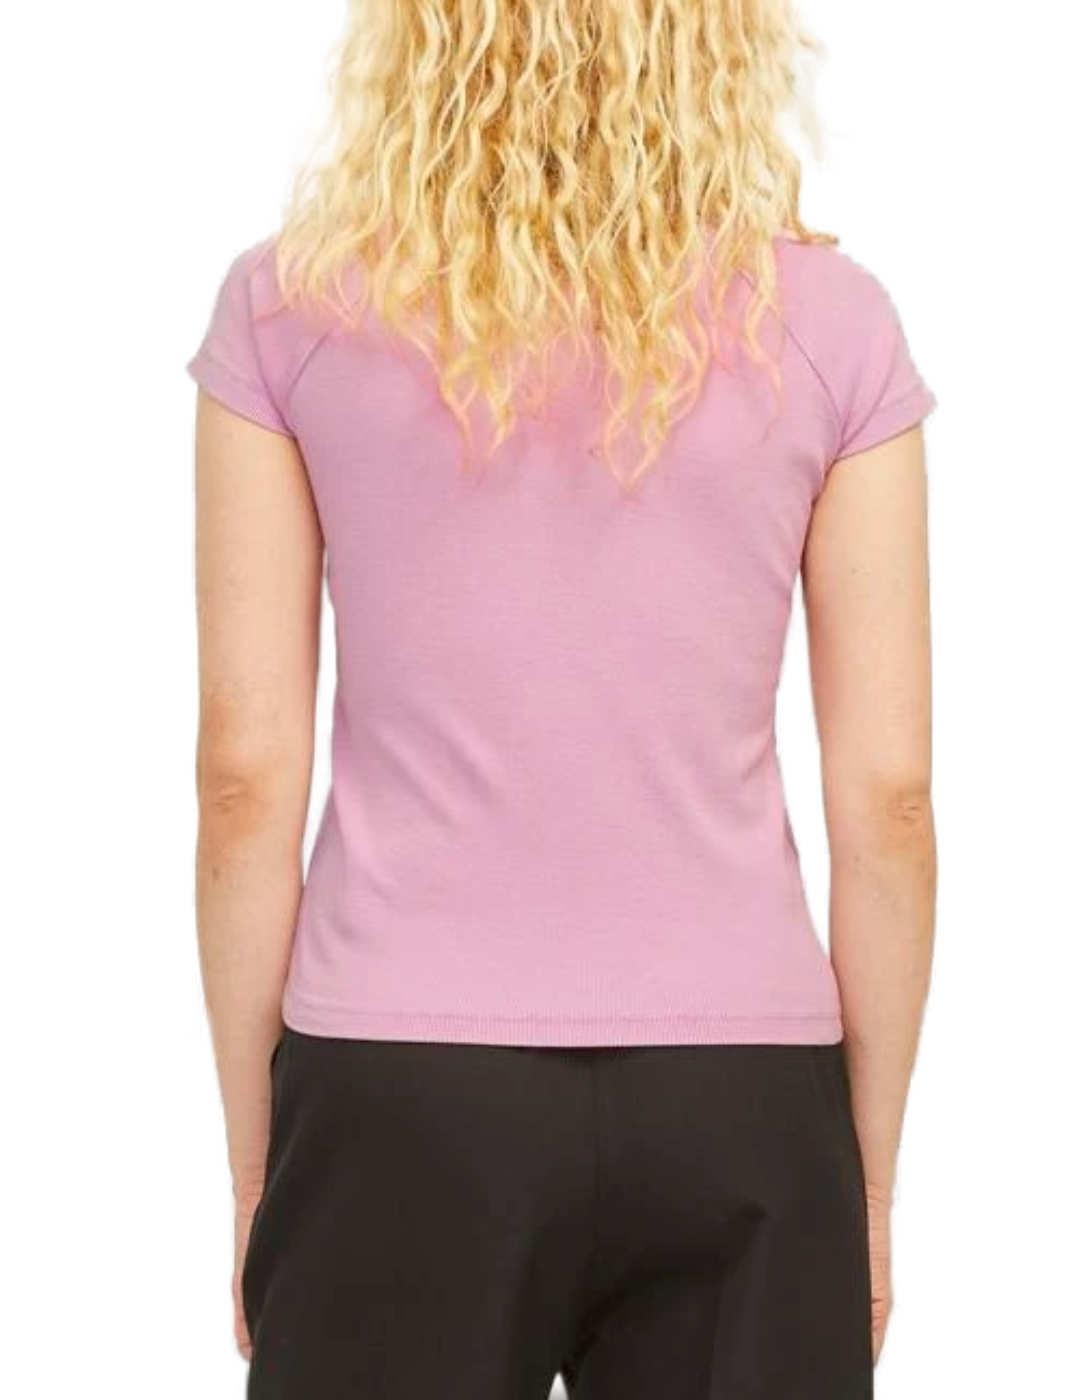 Camiseta de canalé JJXX Friend rosa manga corta para mujer